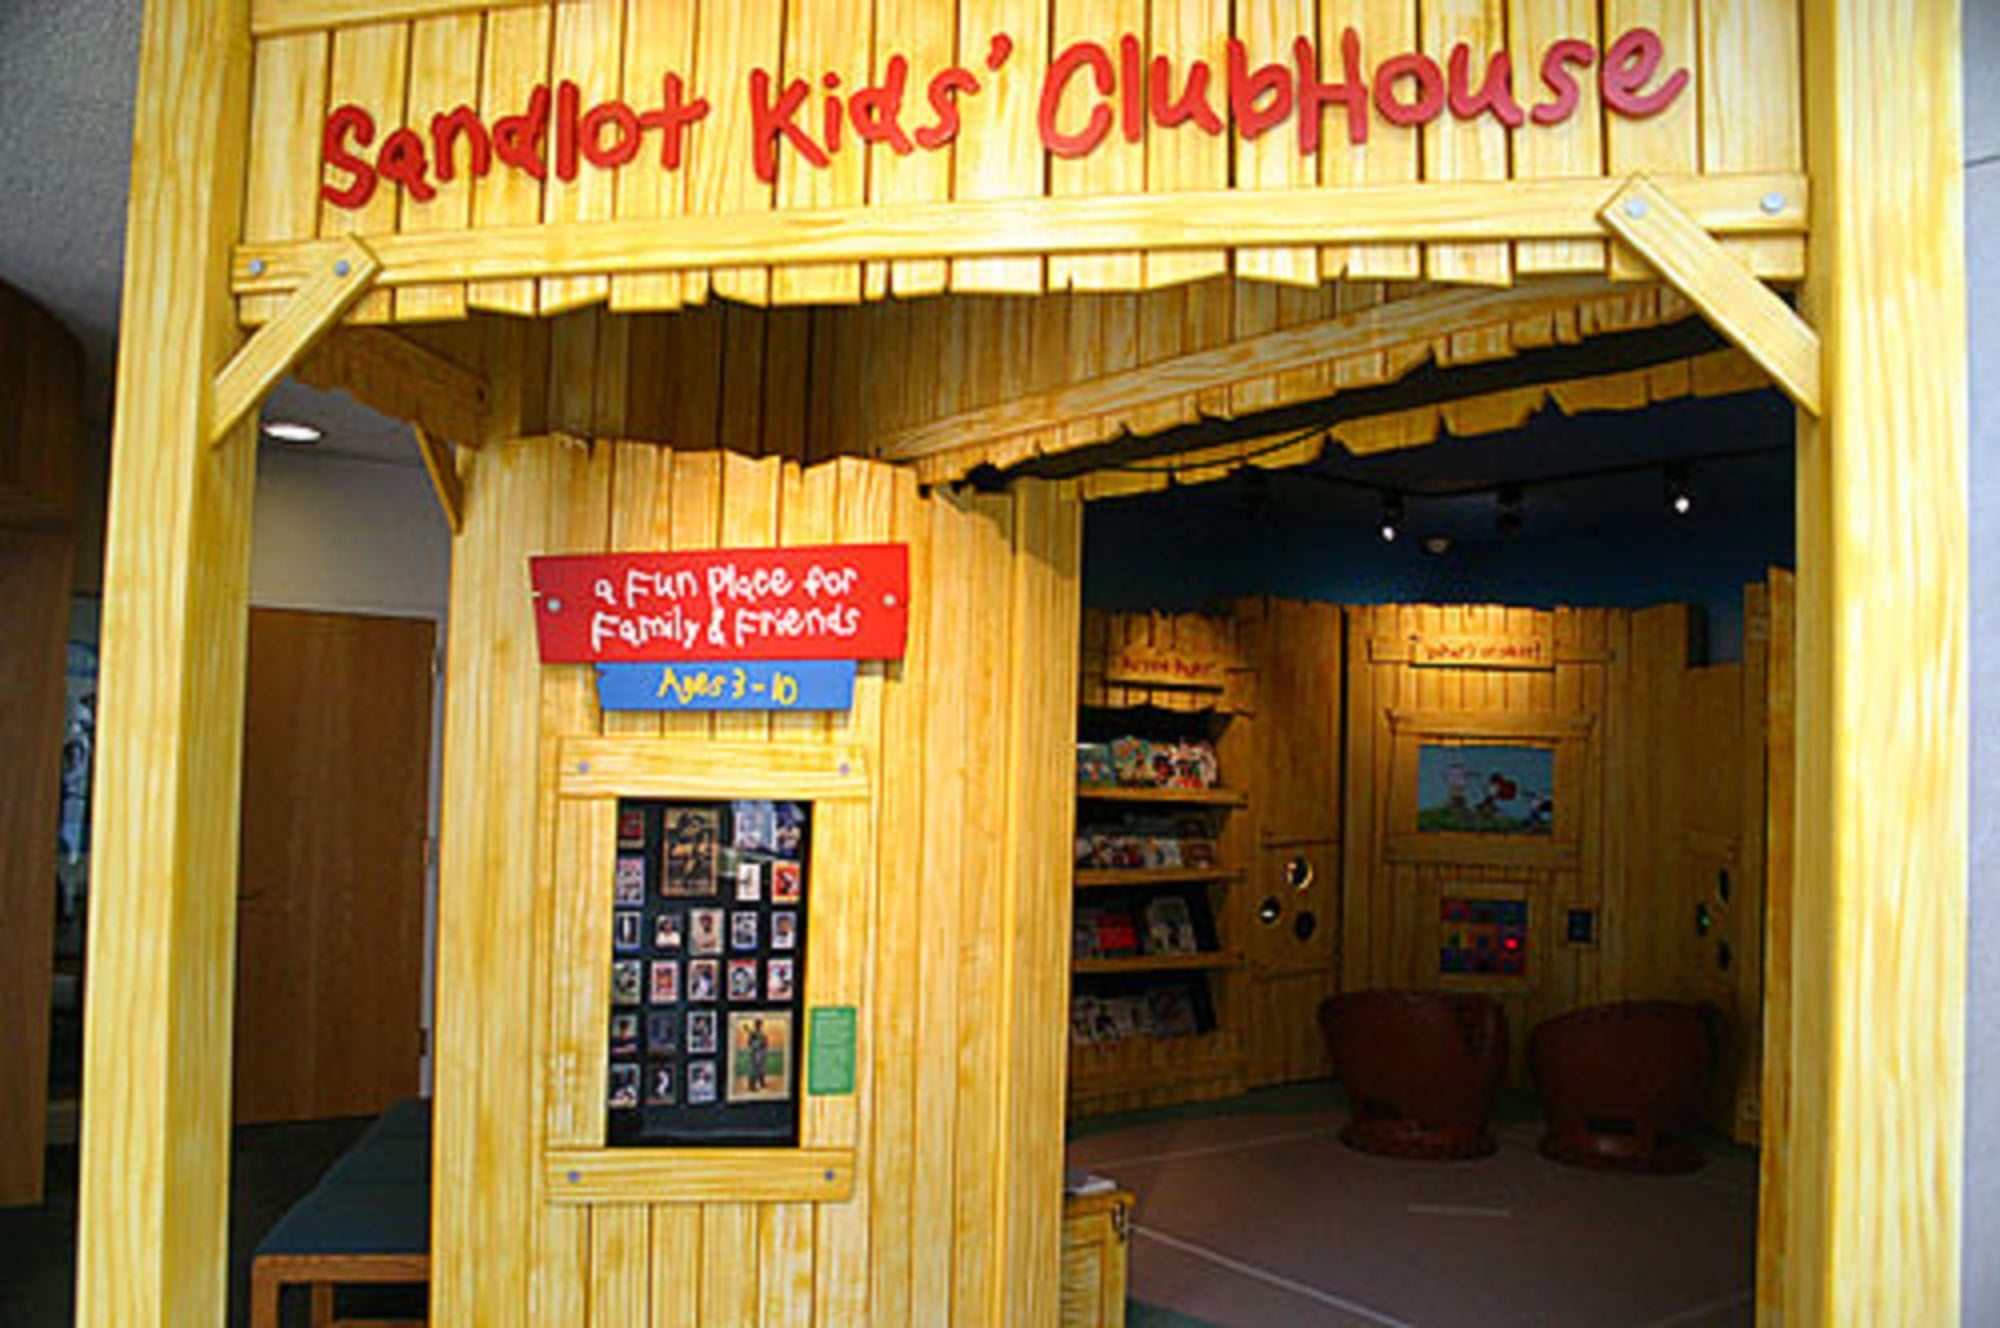 SANDLOT KIDS' CLUBHOUSE